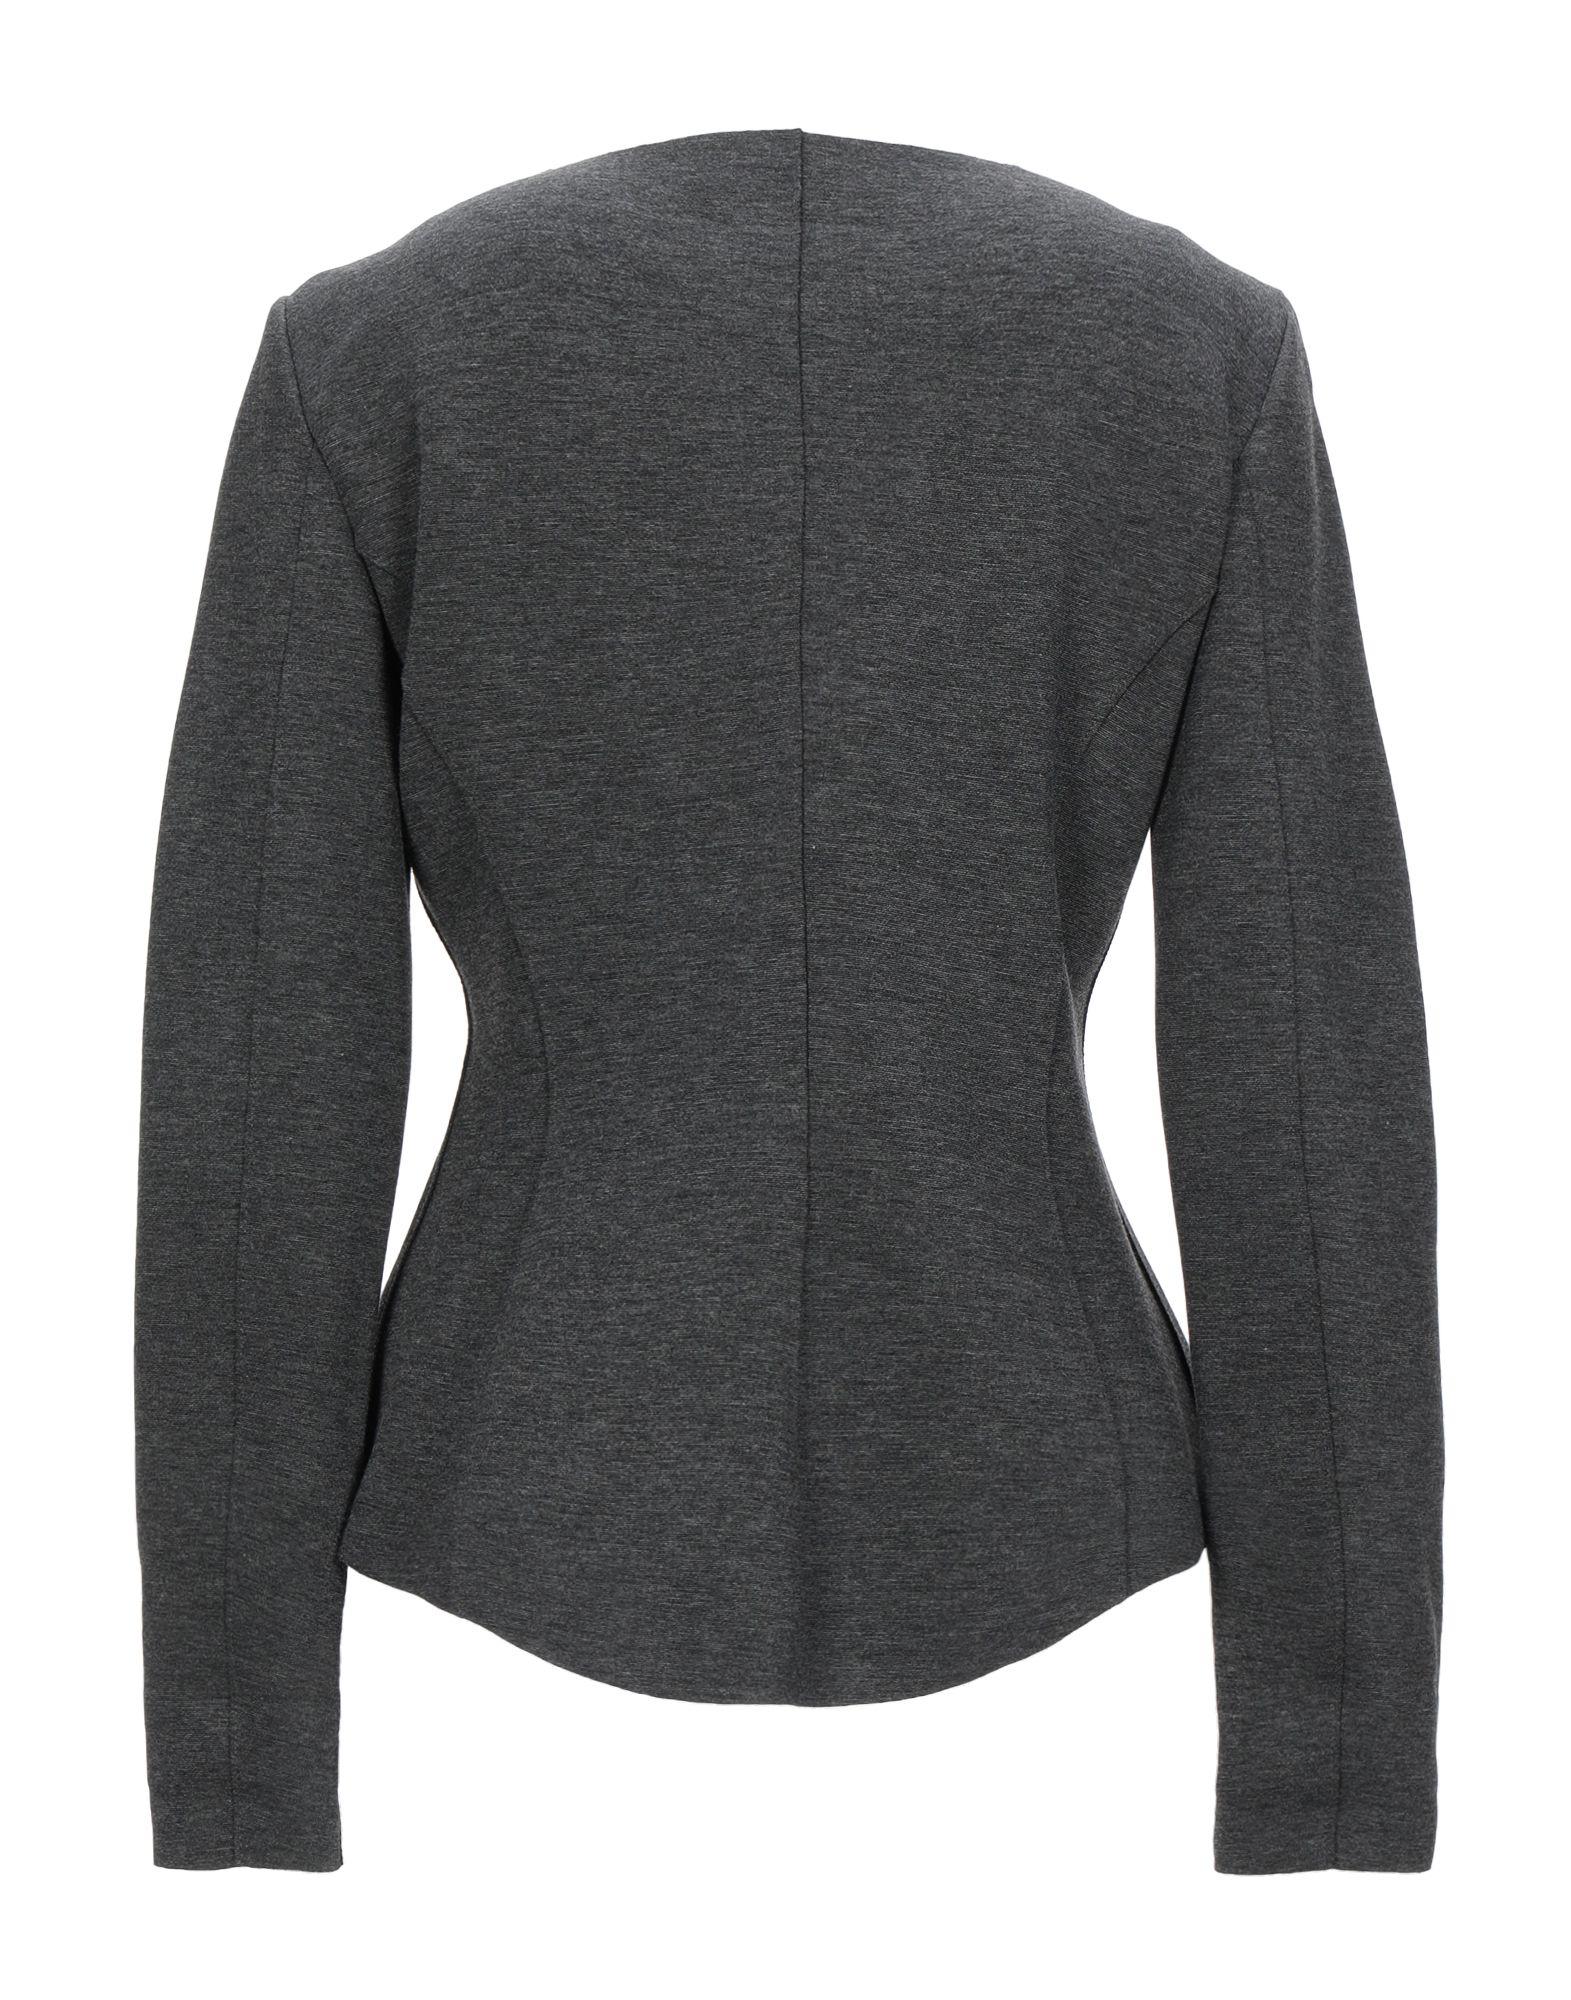 Emporio Armani Suit Jacket in Lead (Gray) - Lyst